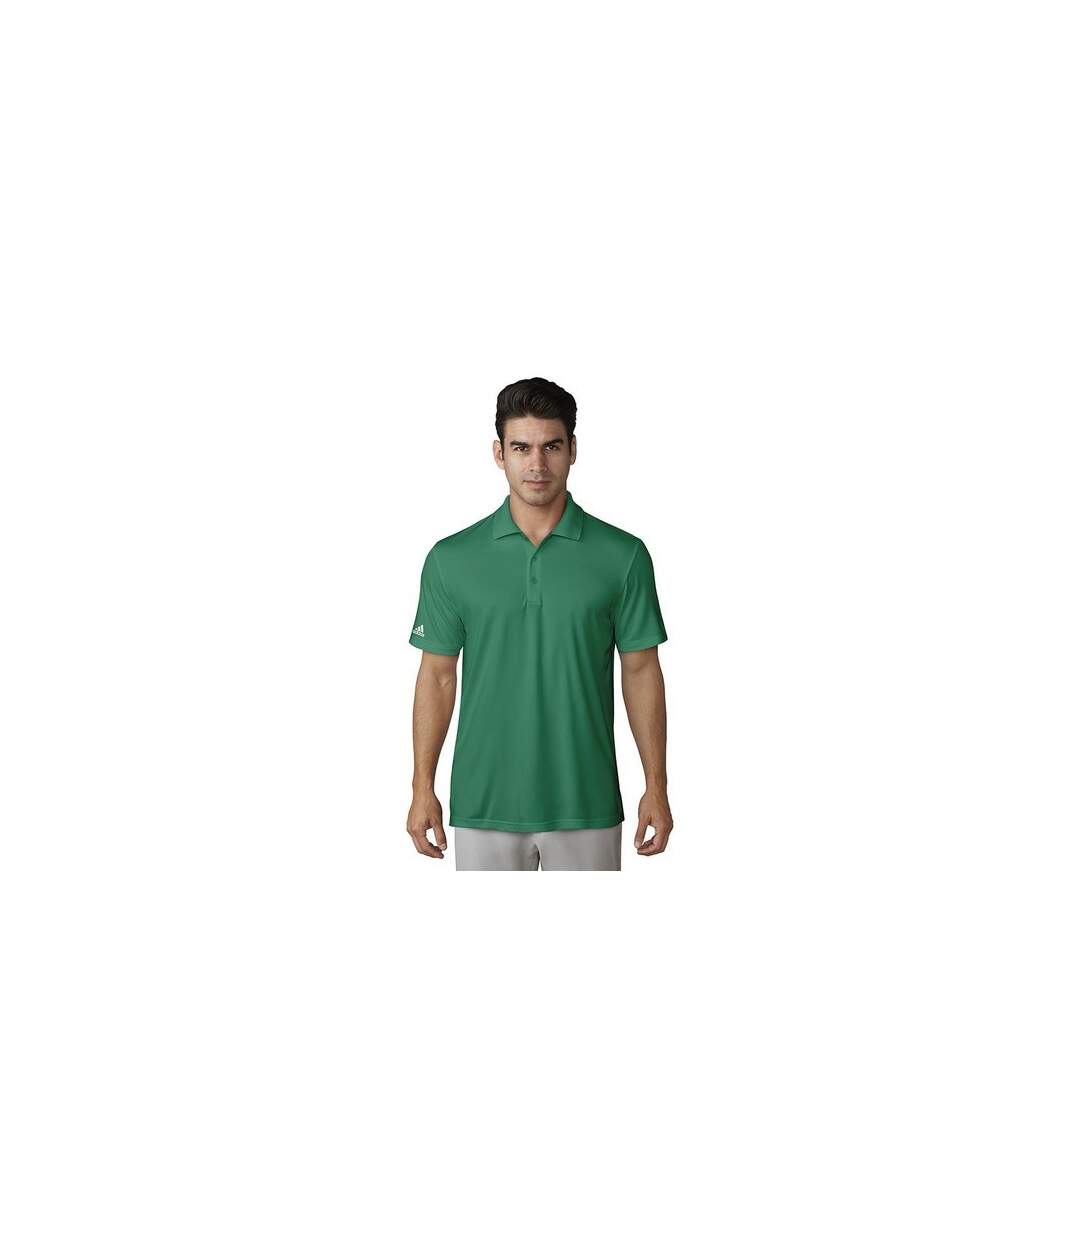 Adidas Mens Performance Polo Shirt (Green)